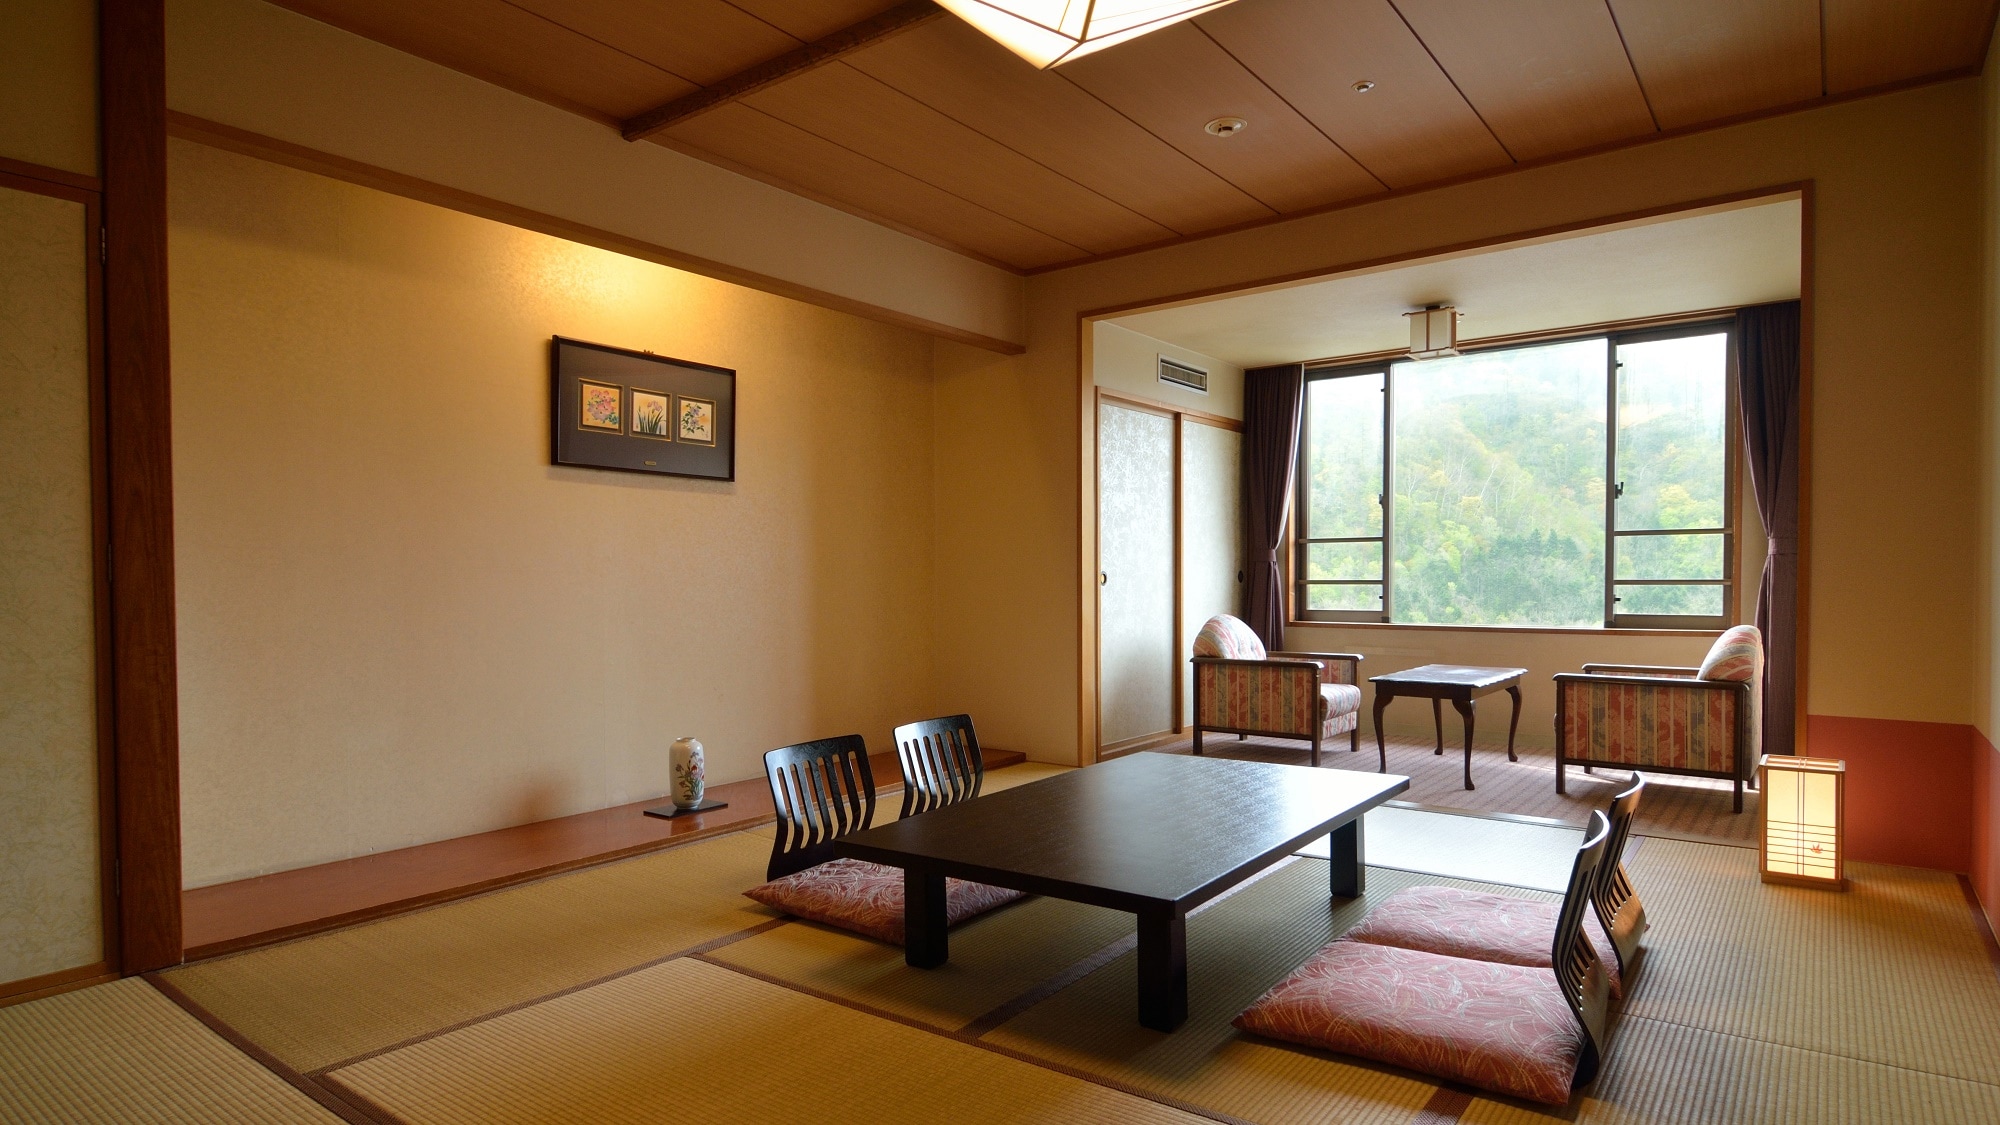 [Kamar bergaya Jepang 10 tikar tatami] Beranda adalah sekitar 2 tikar tatami di dekat jendela. Nikmati waktu santai resor di kamar dengan perasaan terbuka.